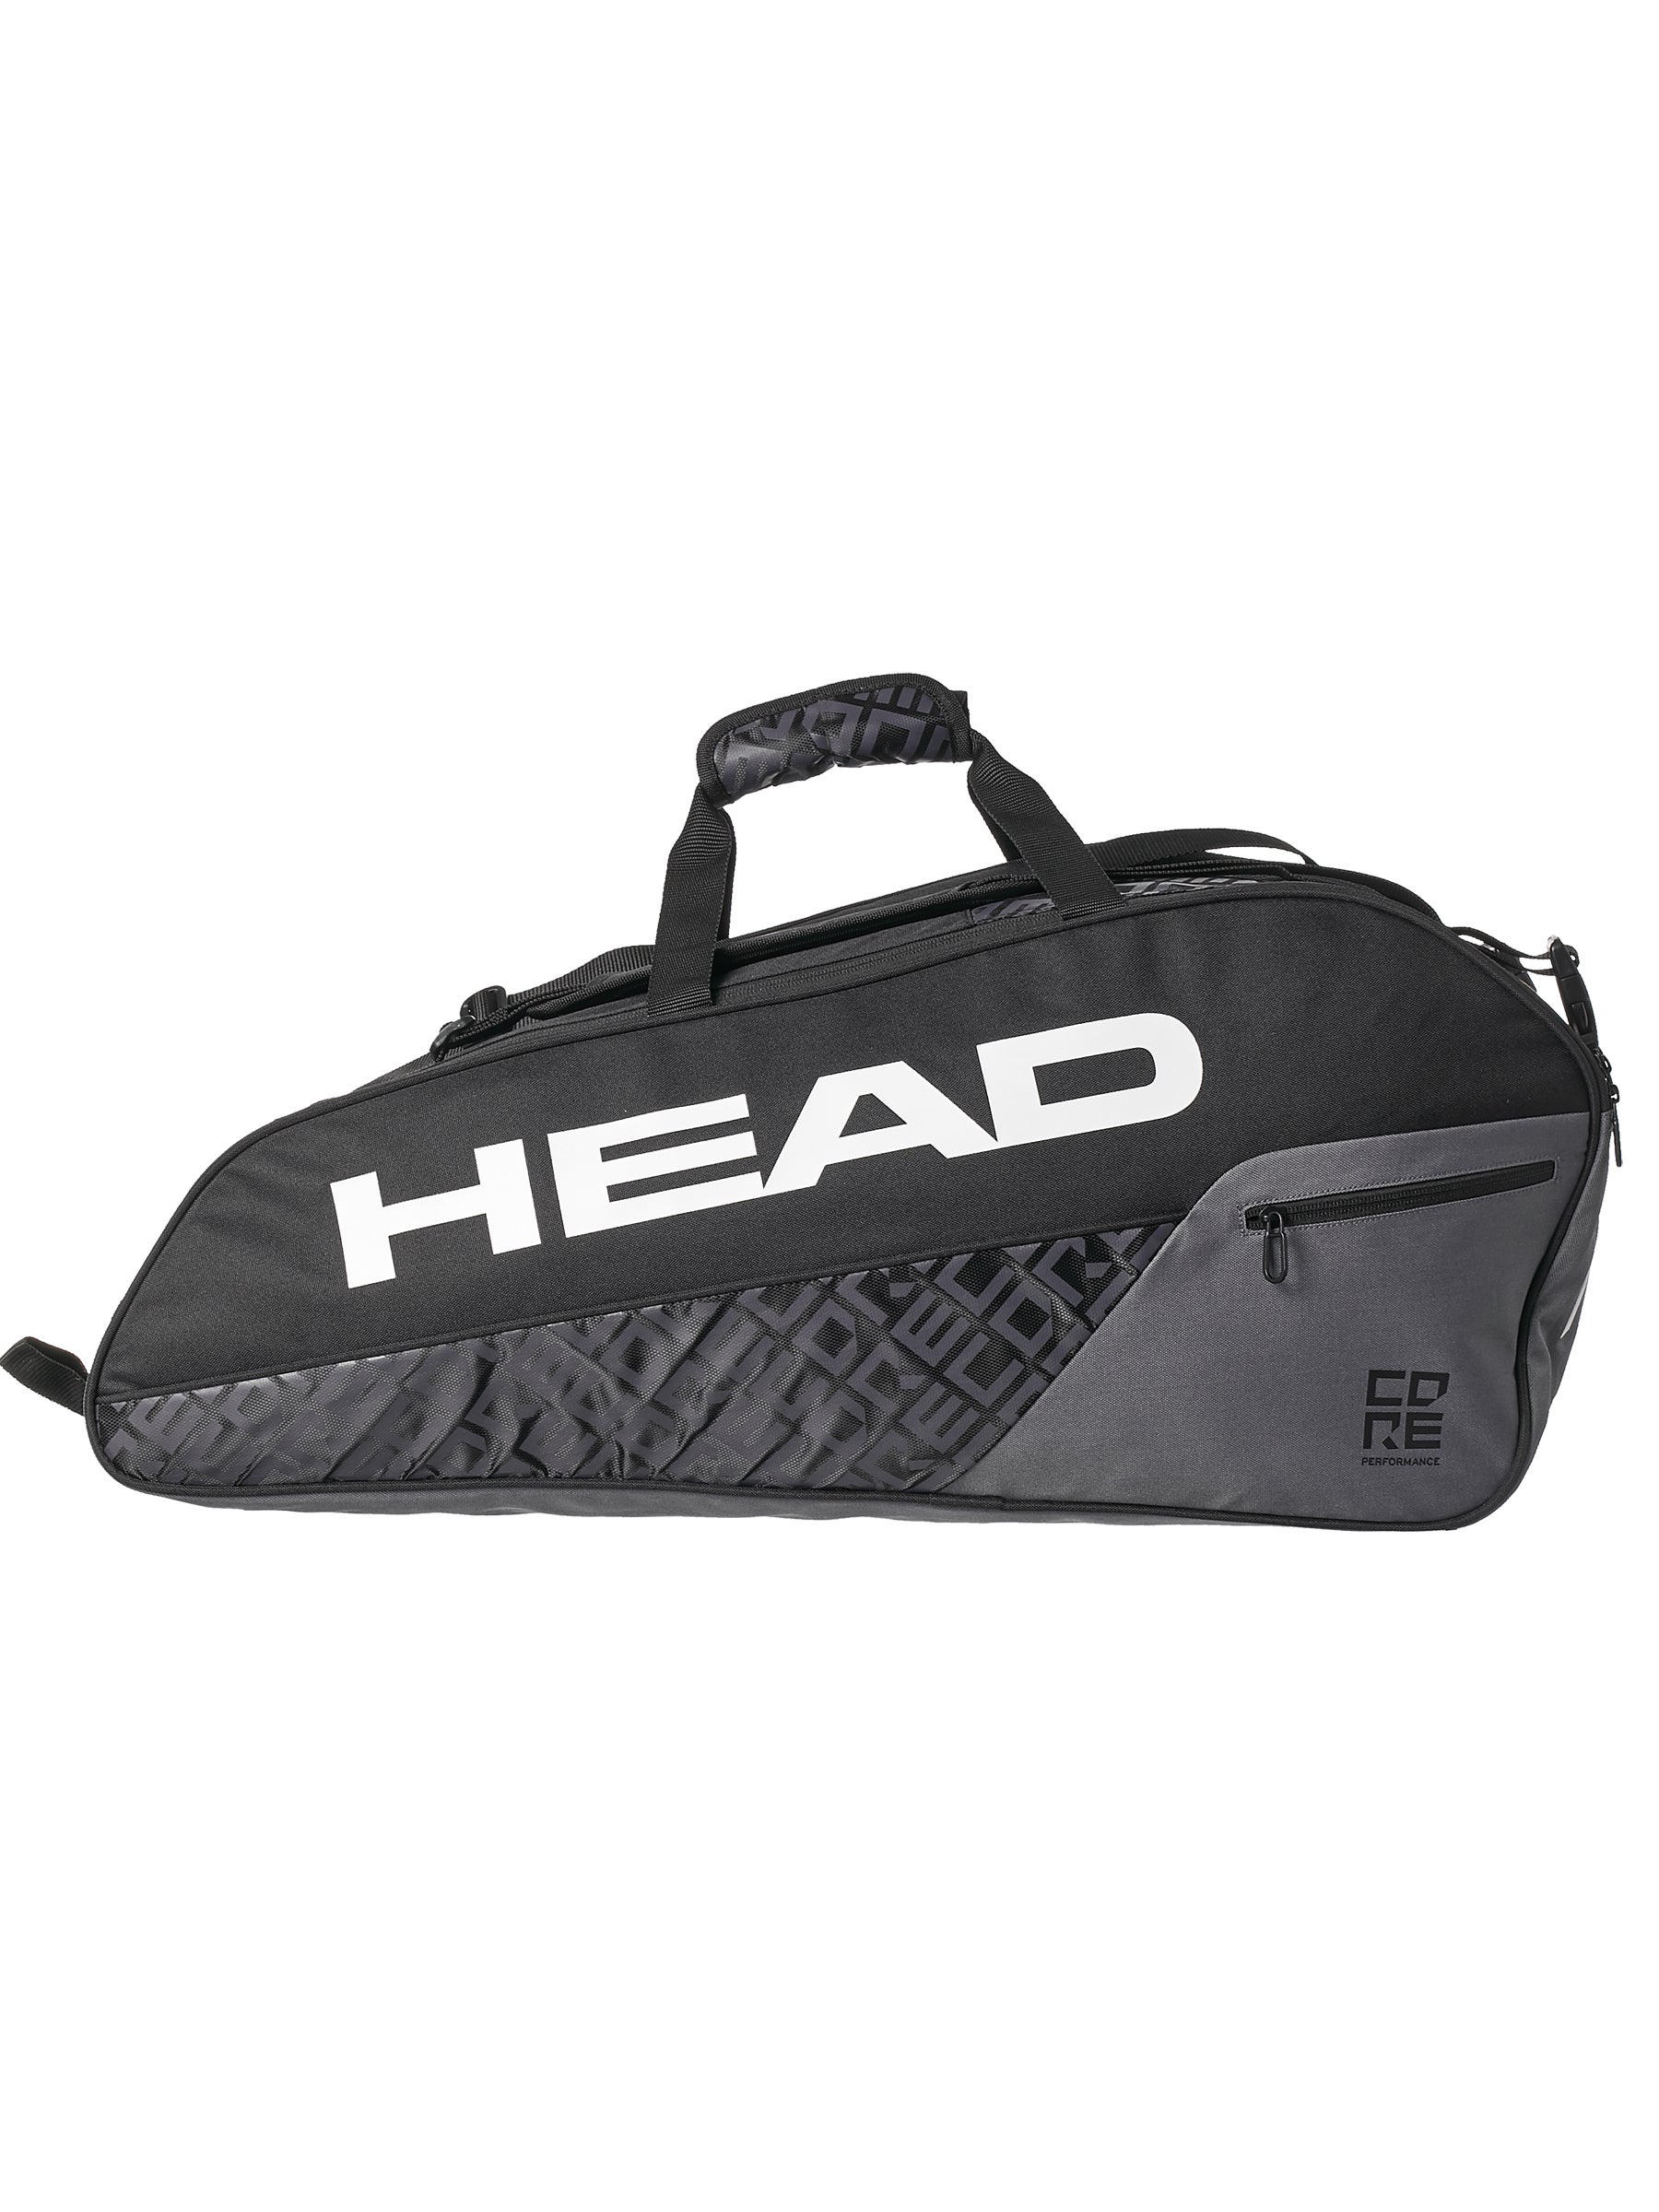 HEAD Core 6R Combi Tennis Racquet Bag 6 Racket Tennis Equipment Duffle Bag 